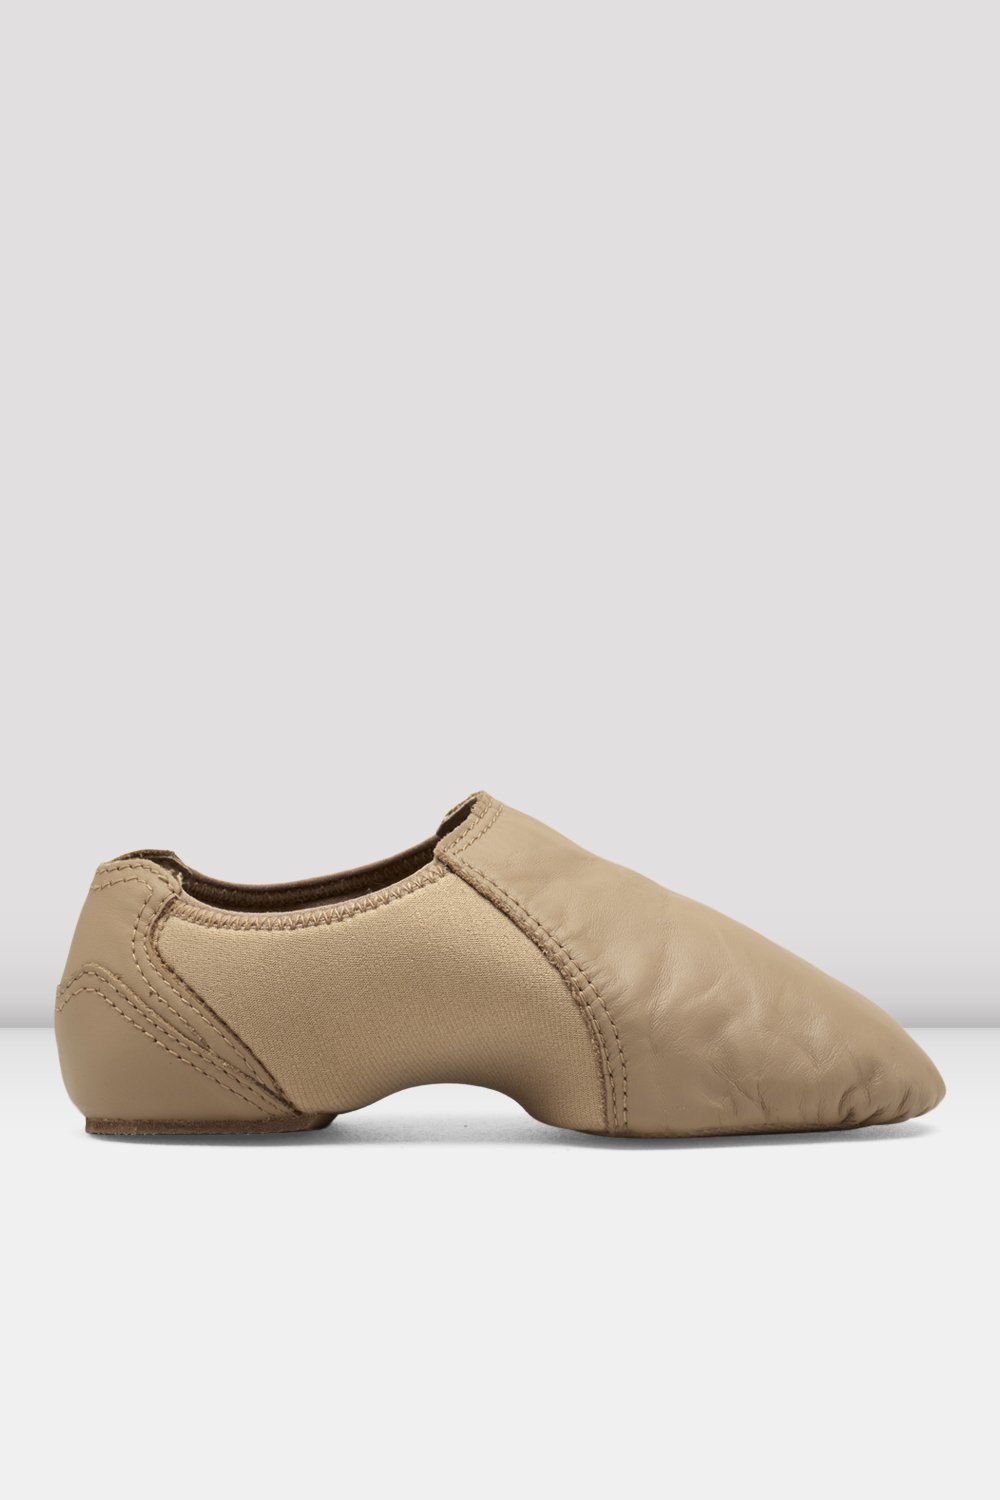 Bloch Ladies Spark Leather & Neoprene Jazz Shoes